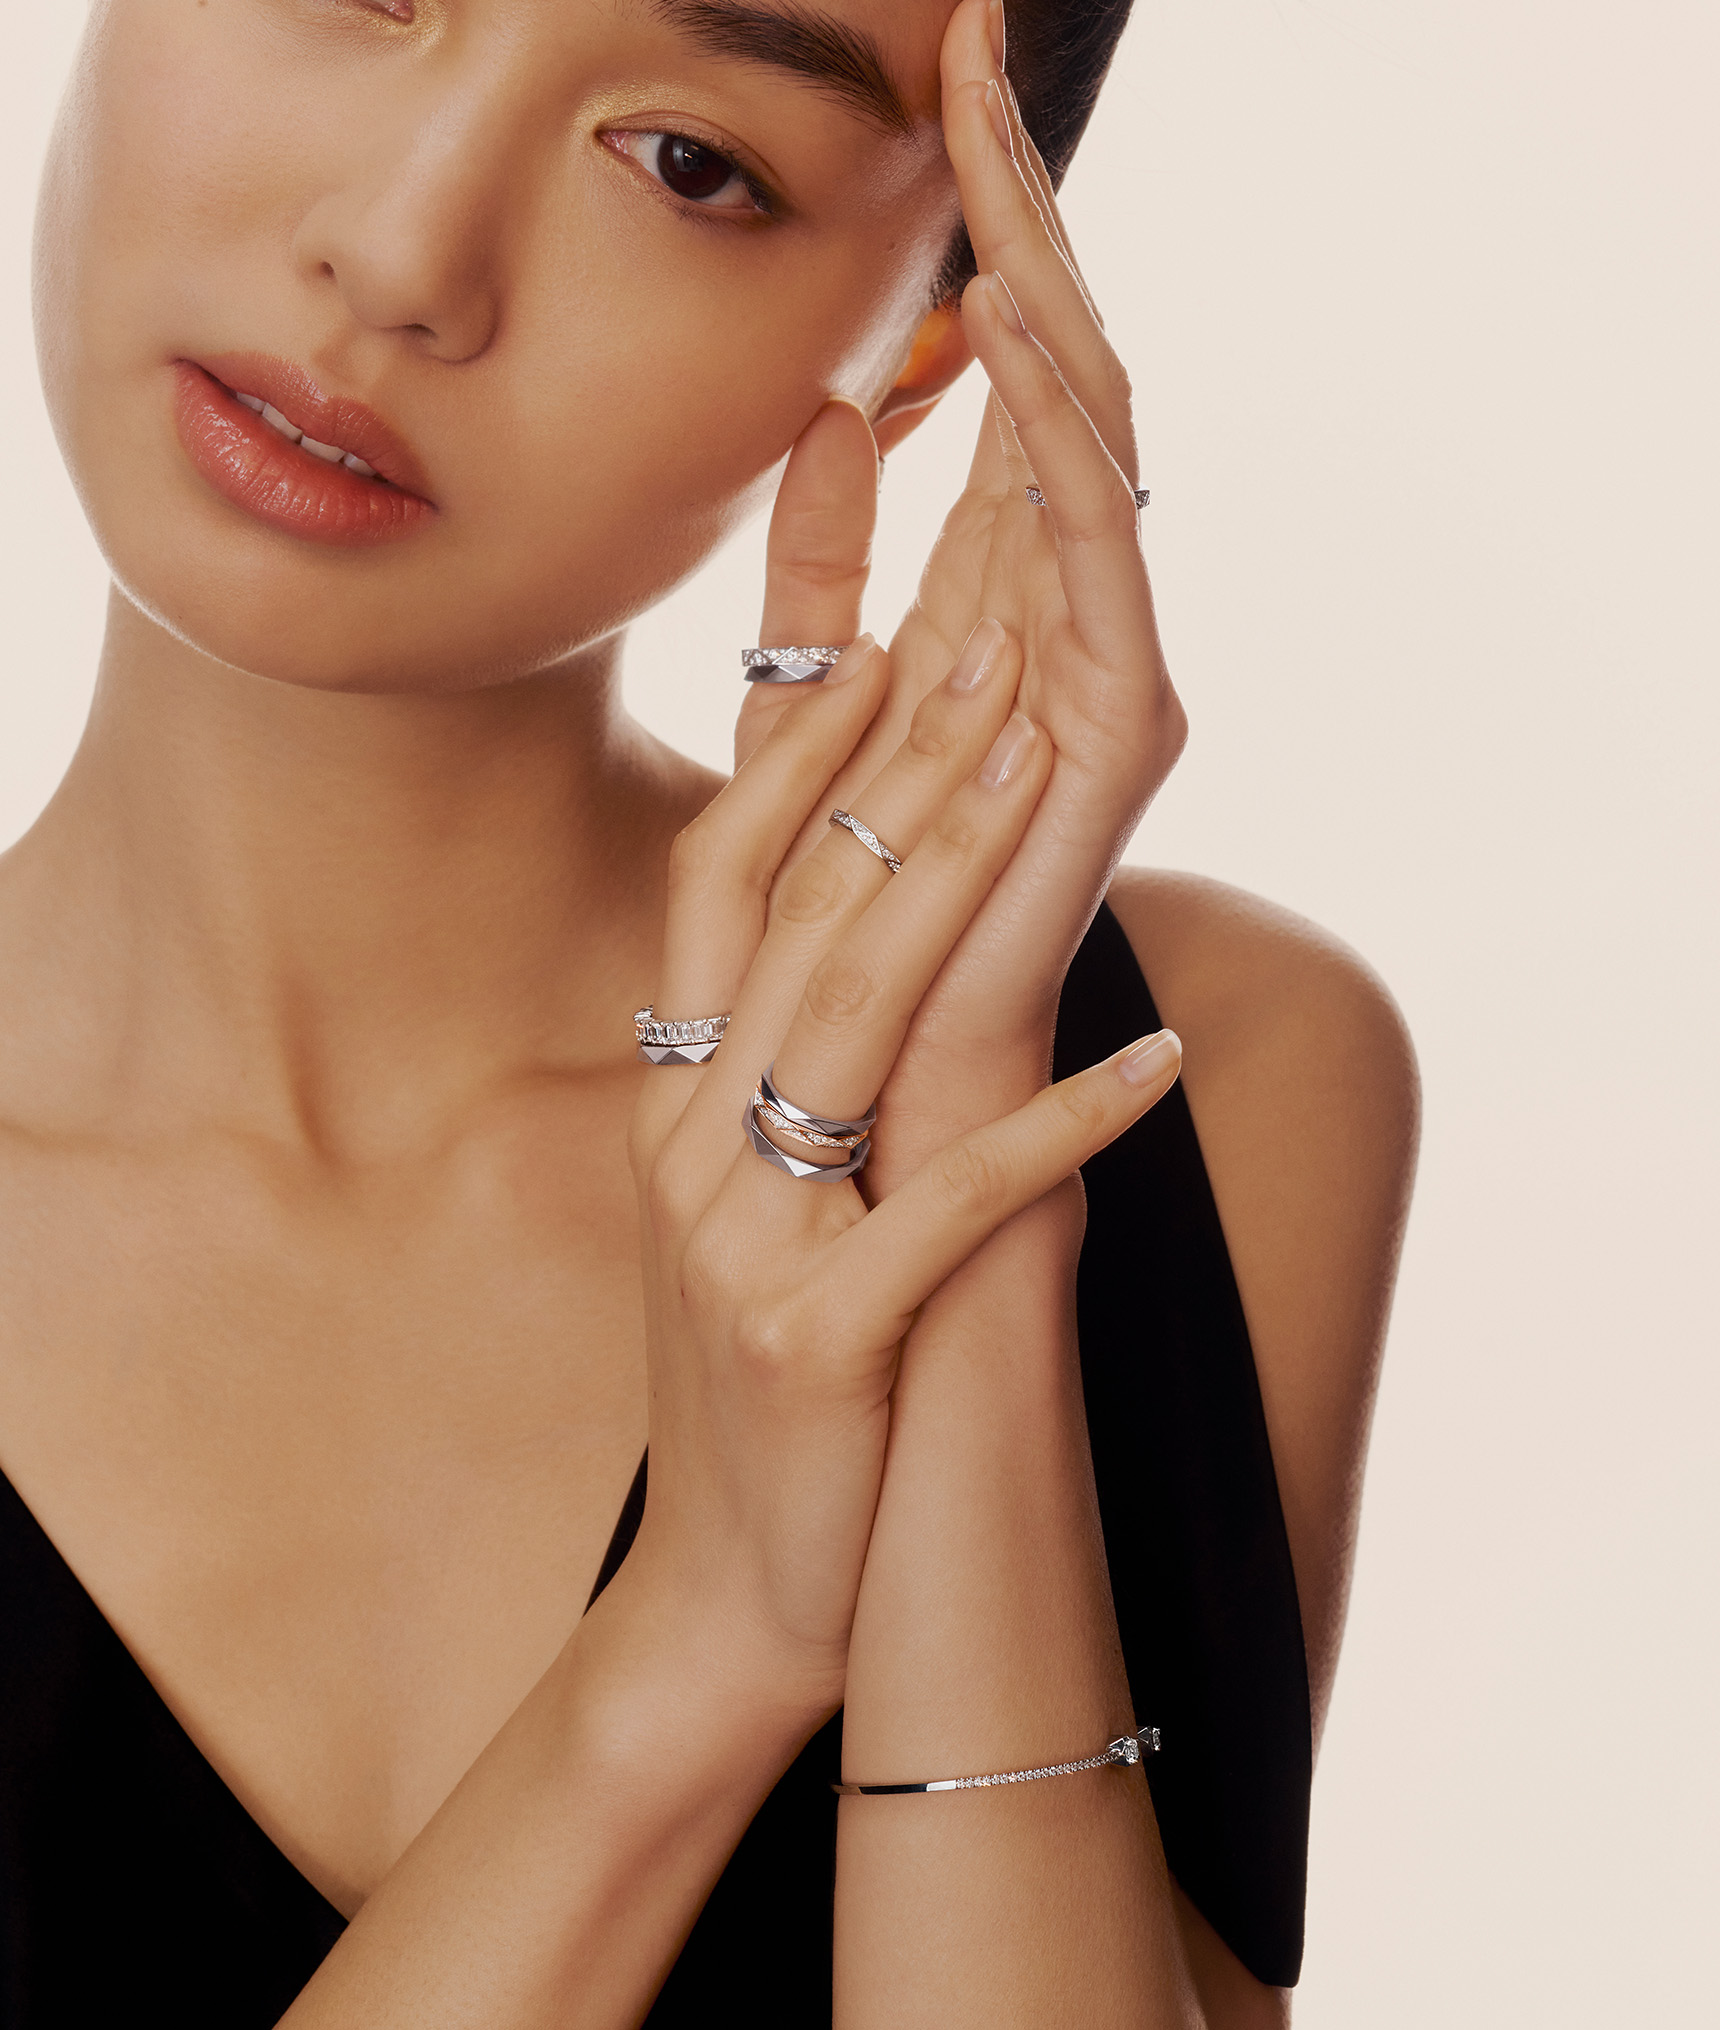 Model wears Graff Laurence Graff Signature jewellery collection diamond jewellery